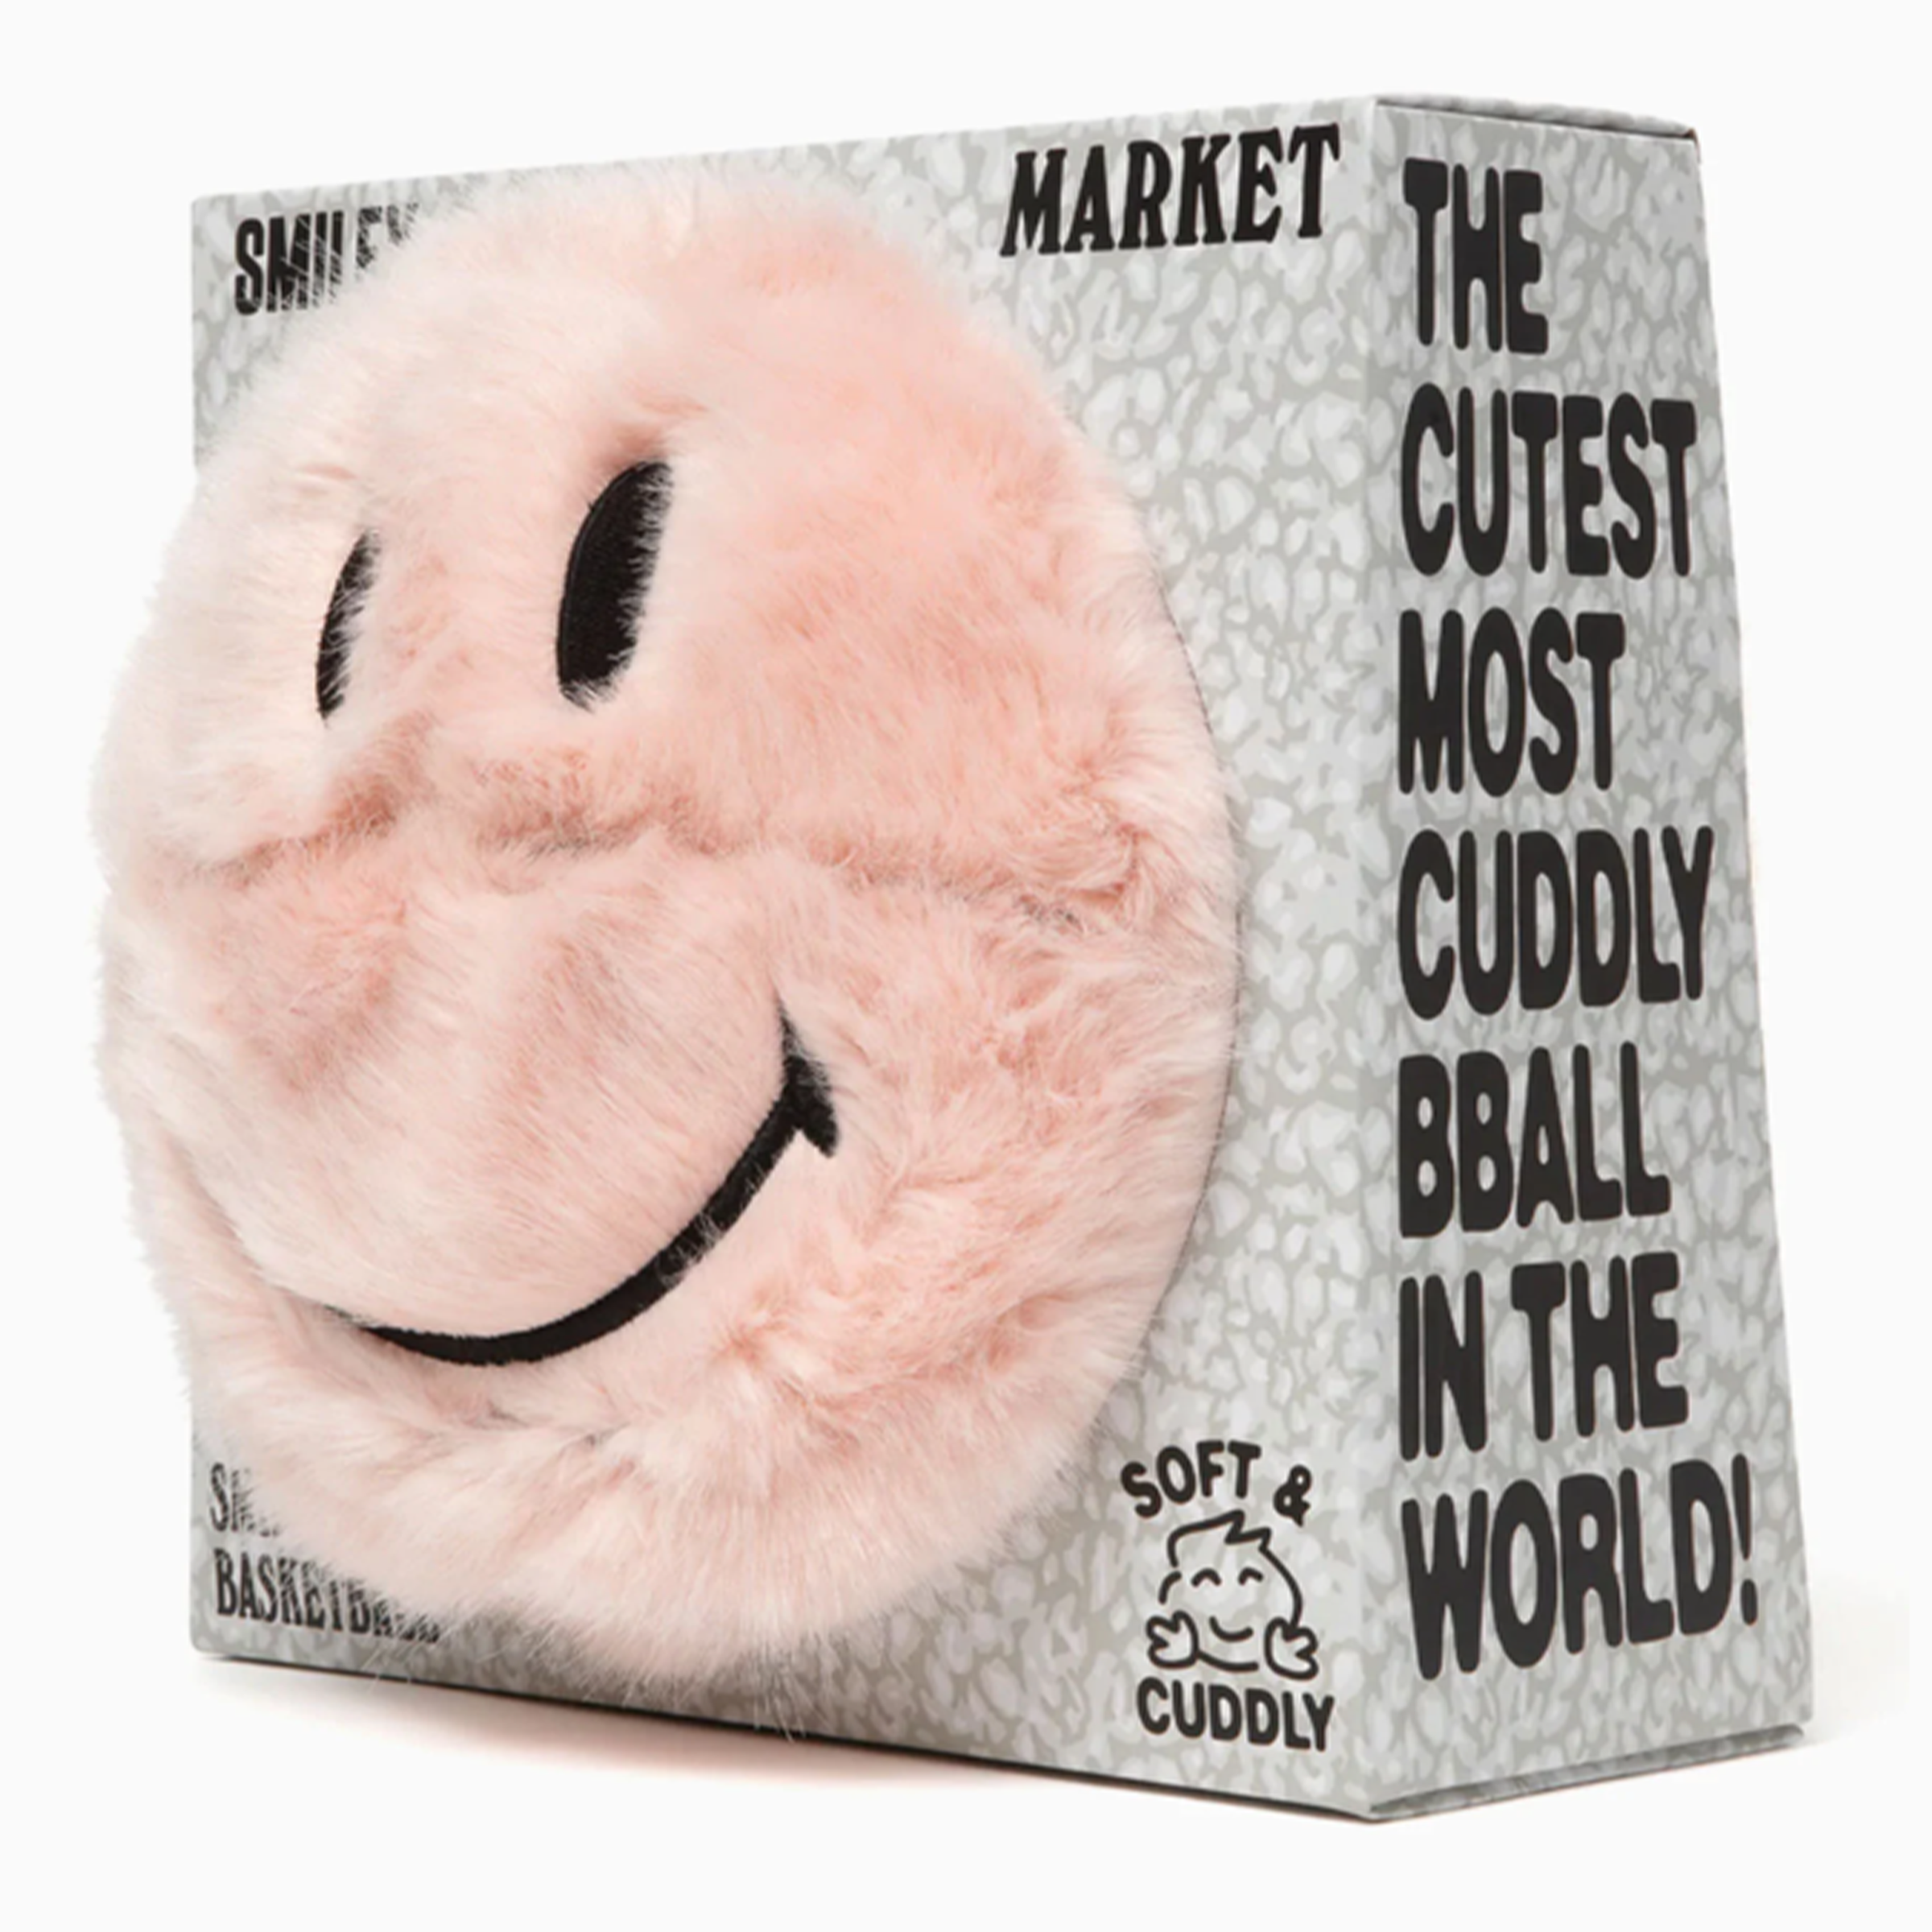 Market "Pink Shaggy" Smiley Basketball